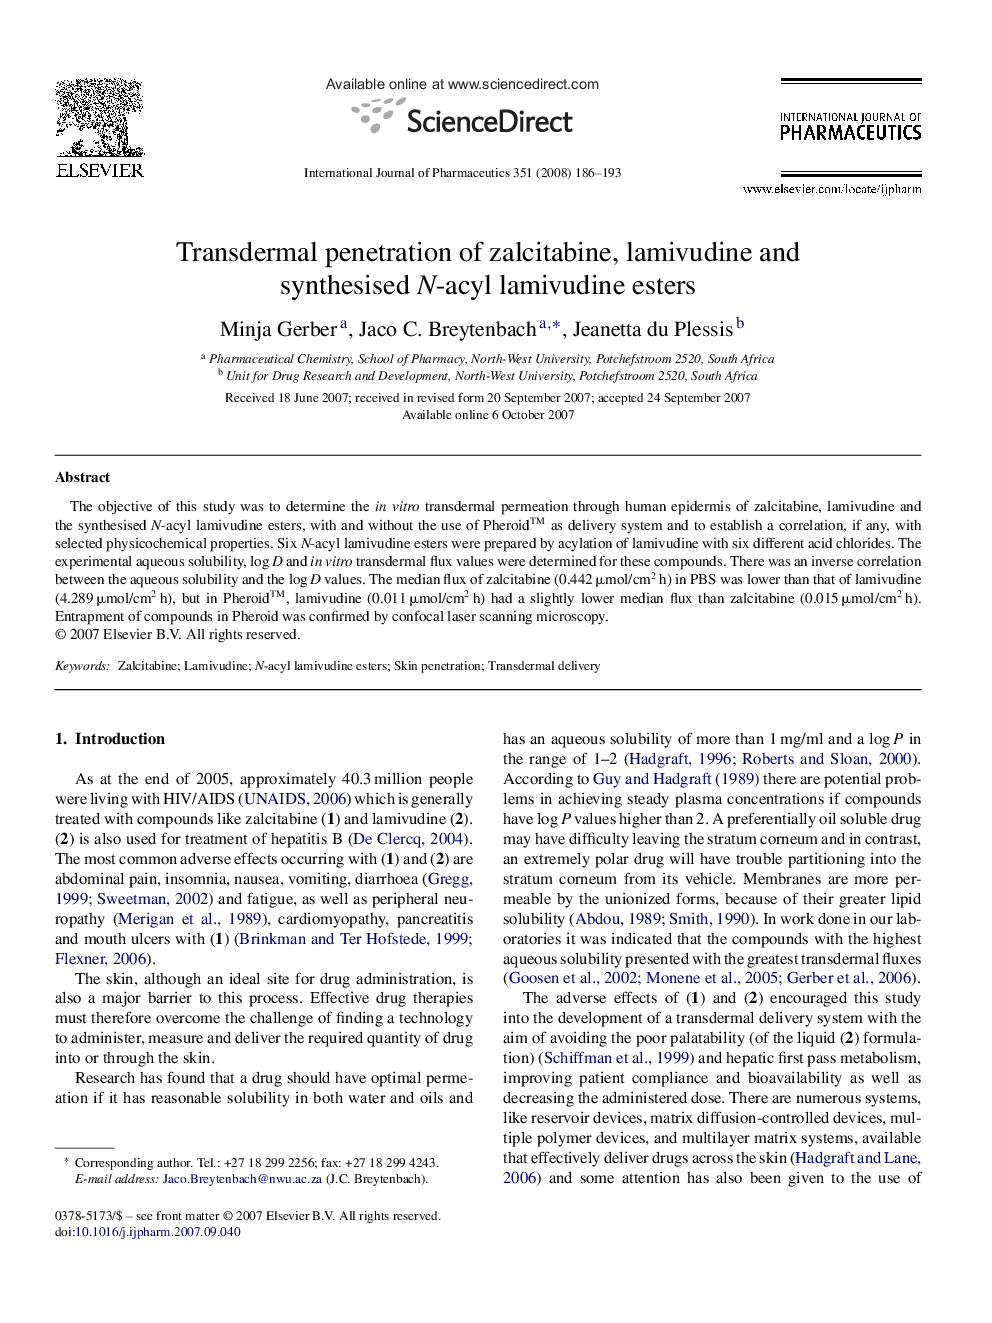 Transdermal penetration of zalcitabine, lamivudine and synthesised N-acyl lamivudine esters